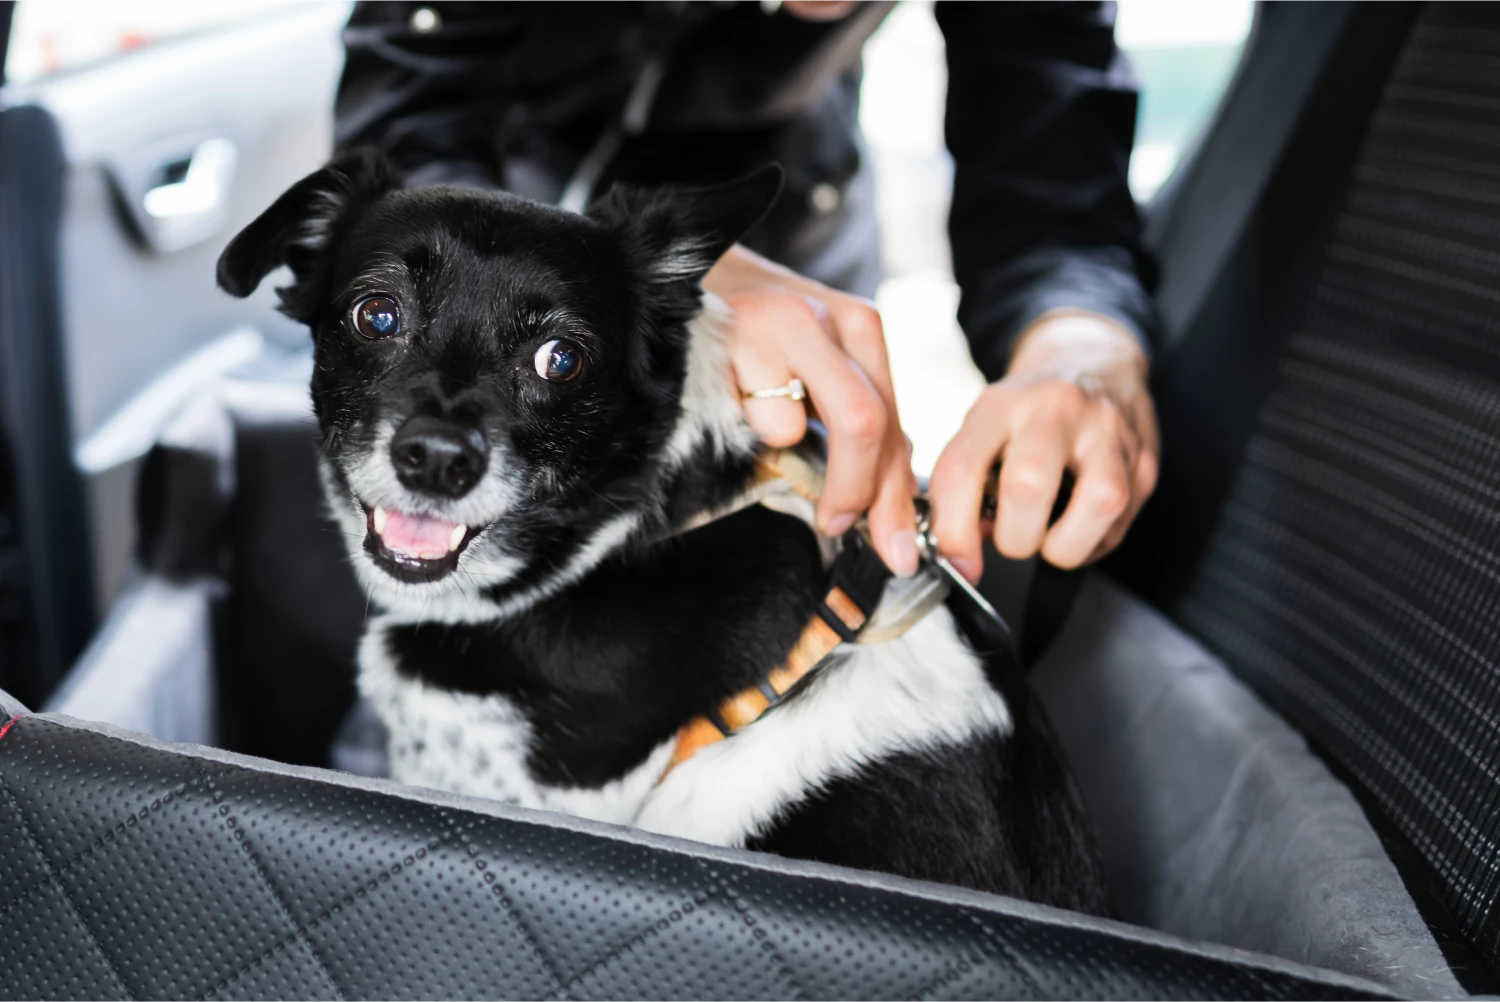 Toyota Prius Dog Car Seat Belt for Boykin Spaniels